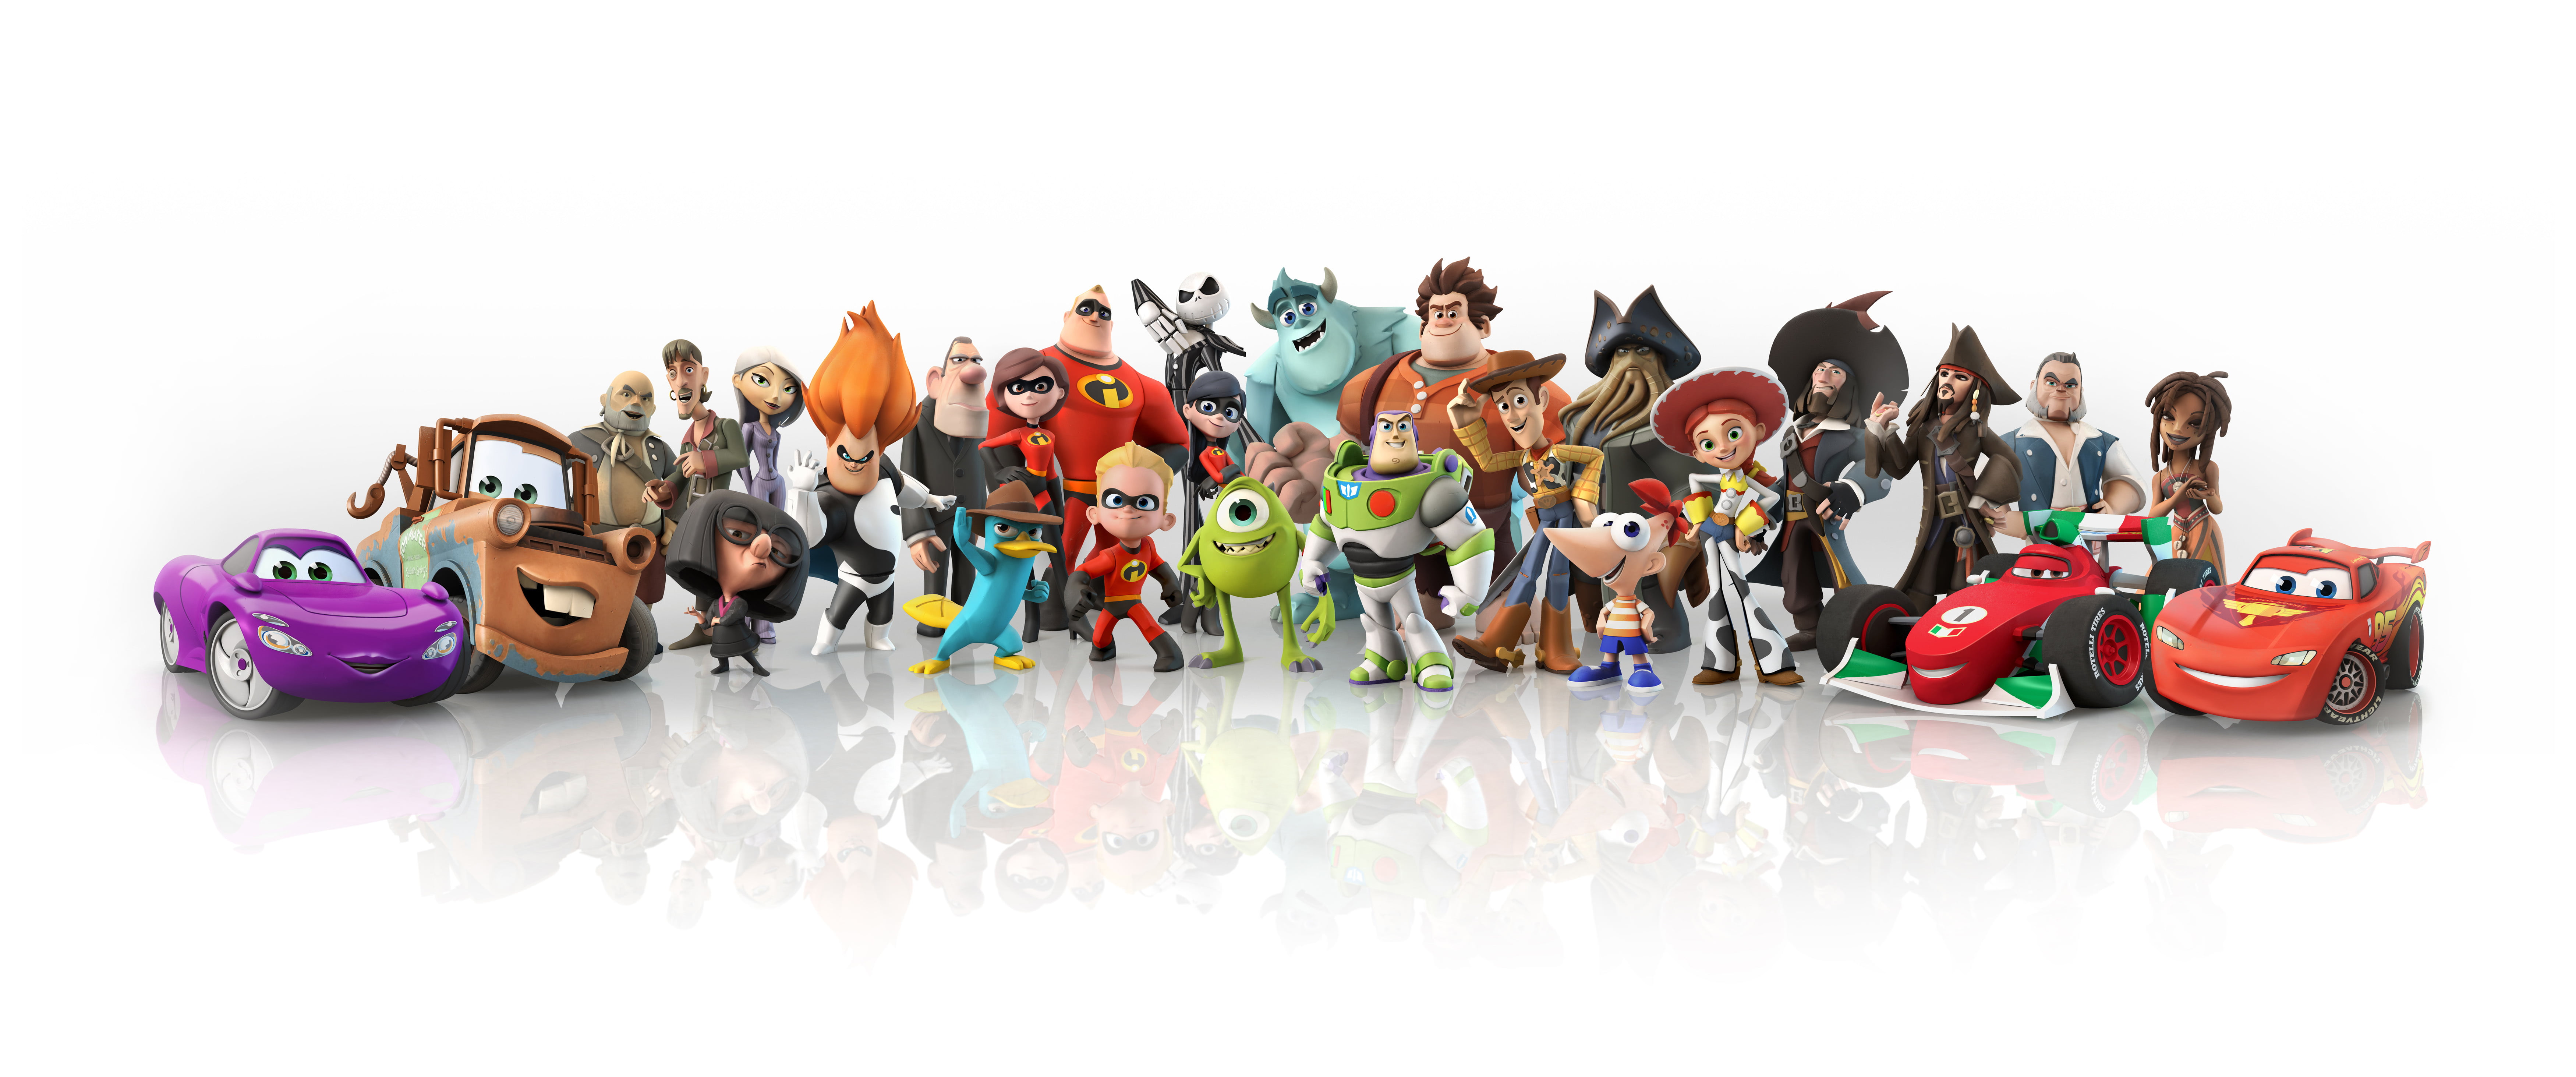 Disney Pixar characters wallpaper, the game, Monsters, Pirates